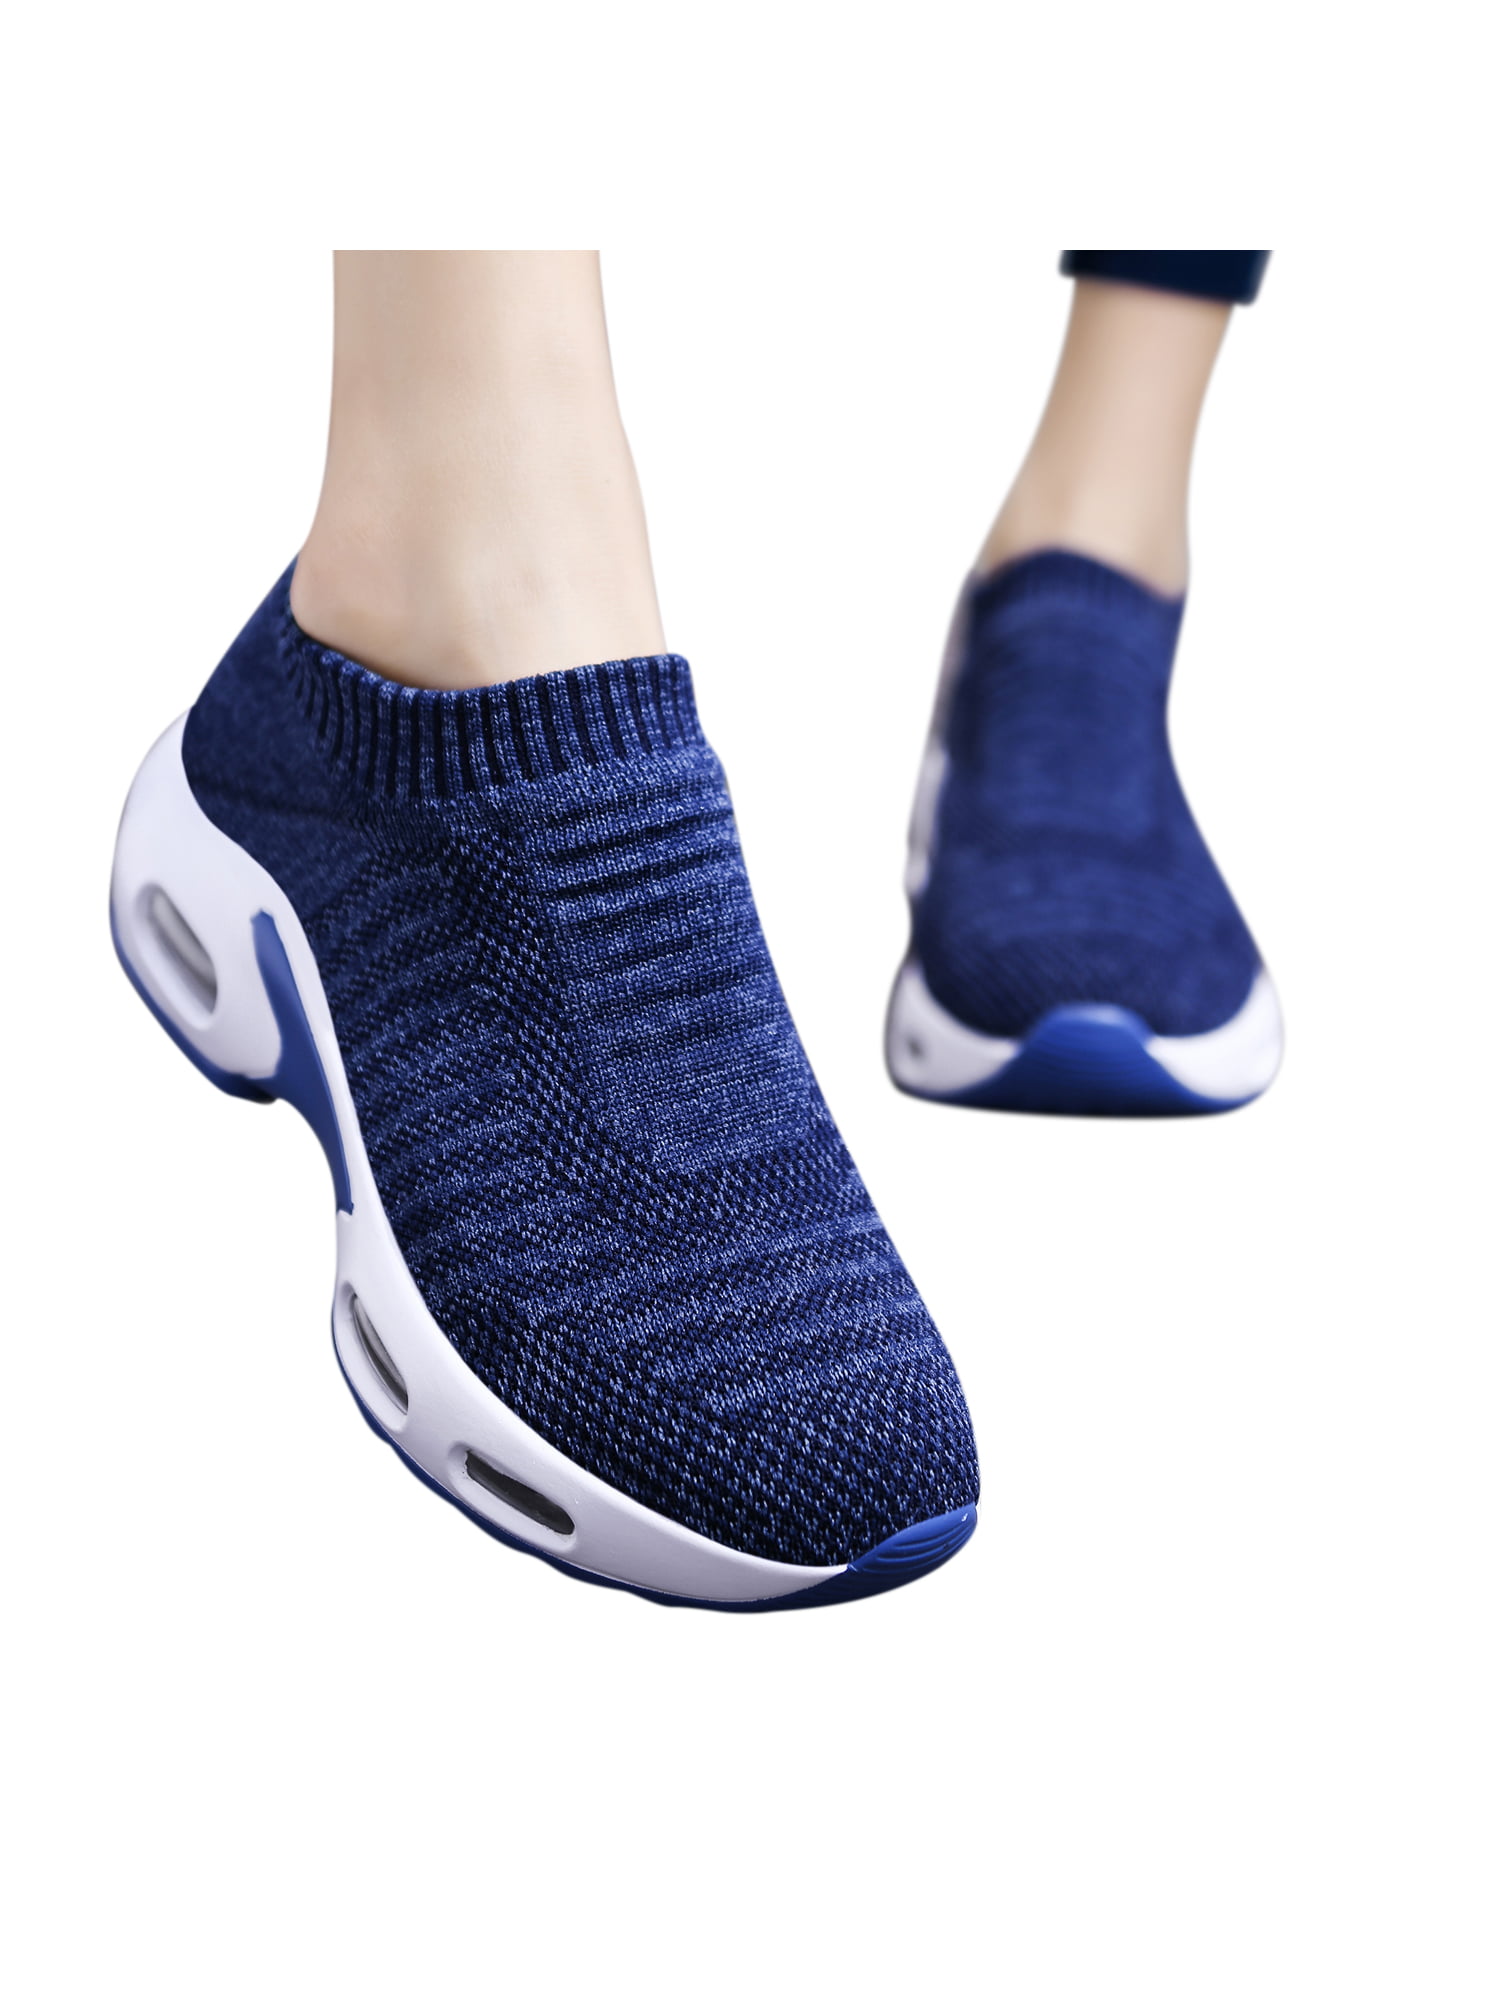 DKMILYAIR Steel Toe Sneakers for Women Air Cushion Slip On Safety Work Shoes Lightweight Sock Sneakers Comfortable Slip Resistant Platform Walking Shoes 